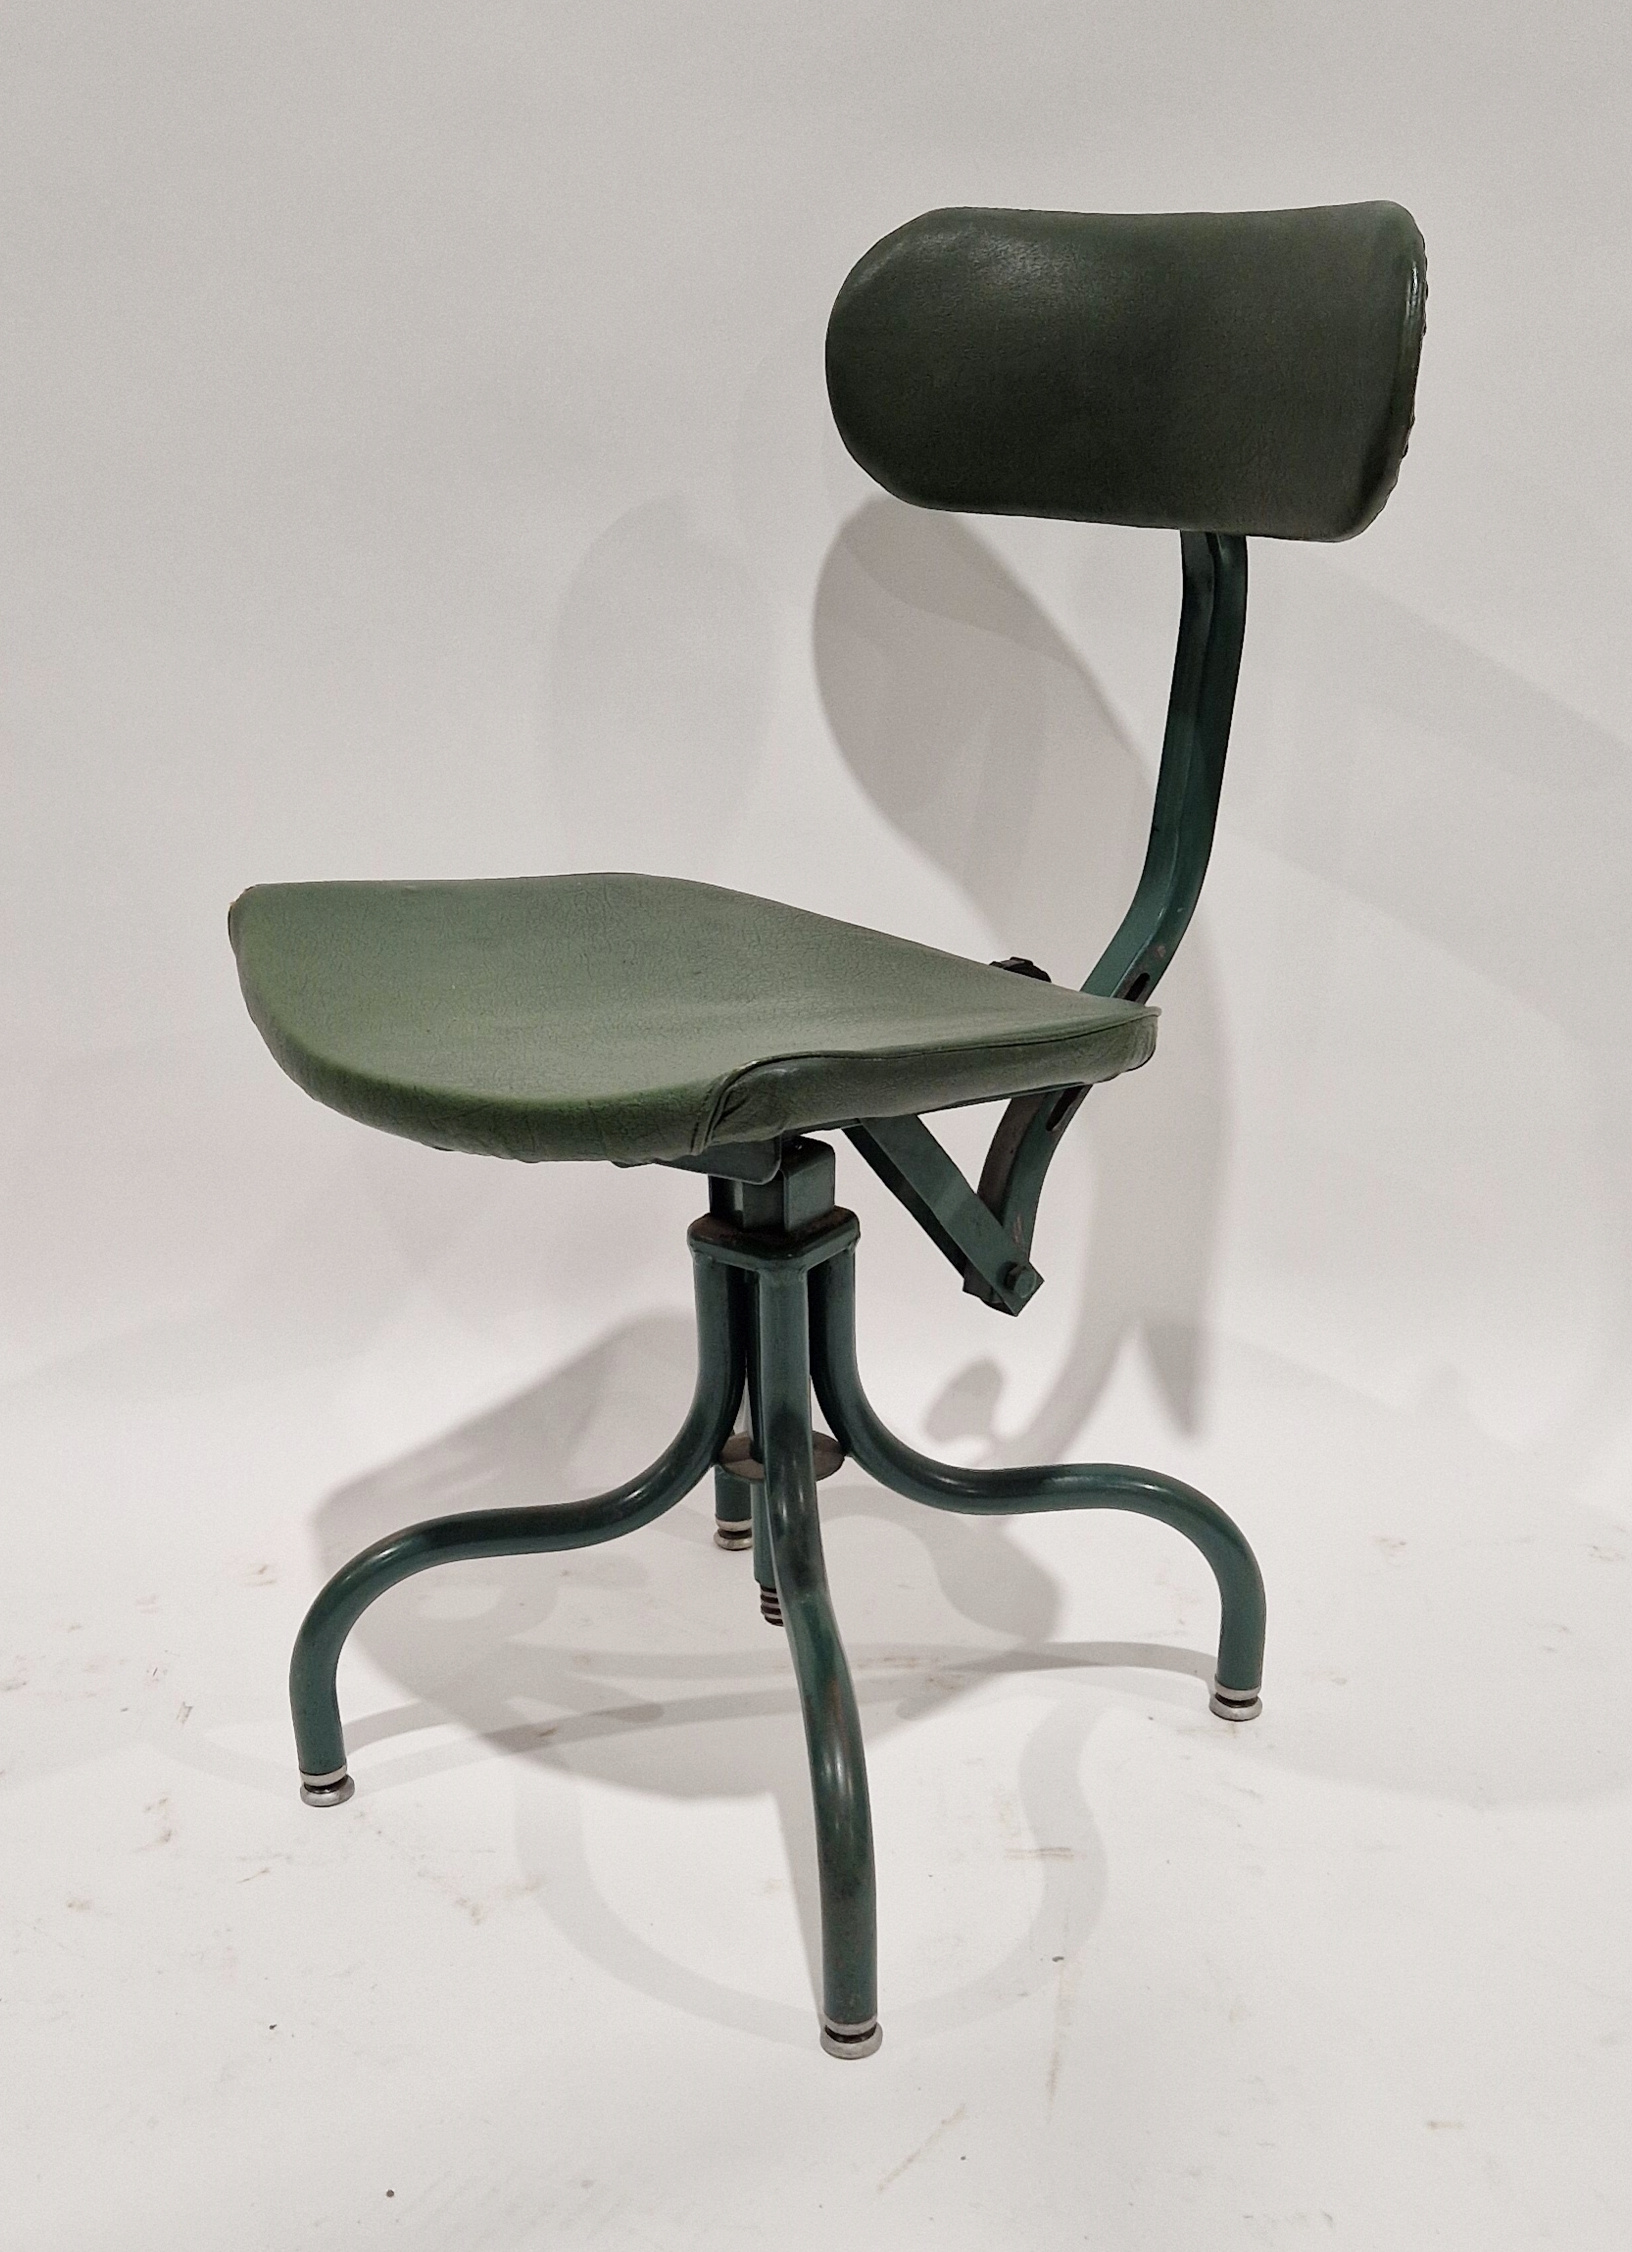 20th century industrialist bu-al machinist's swivel chair on four tubular metal legs, 75cm high - Image 2 of 2